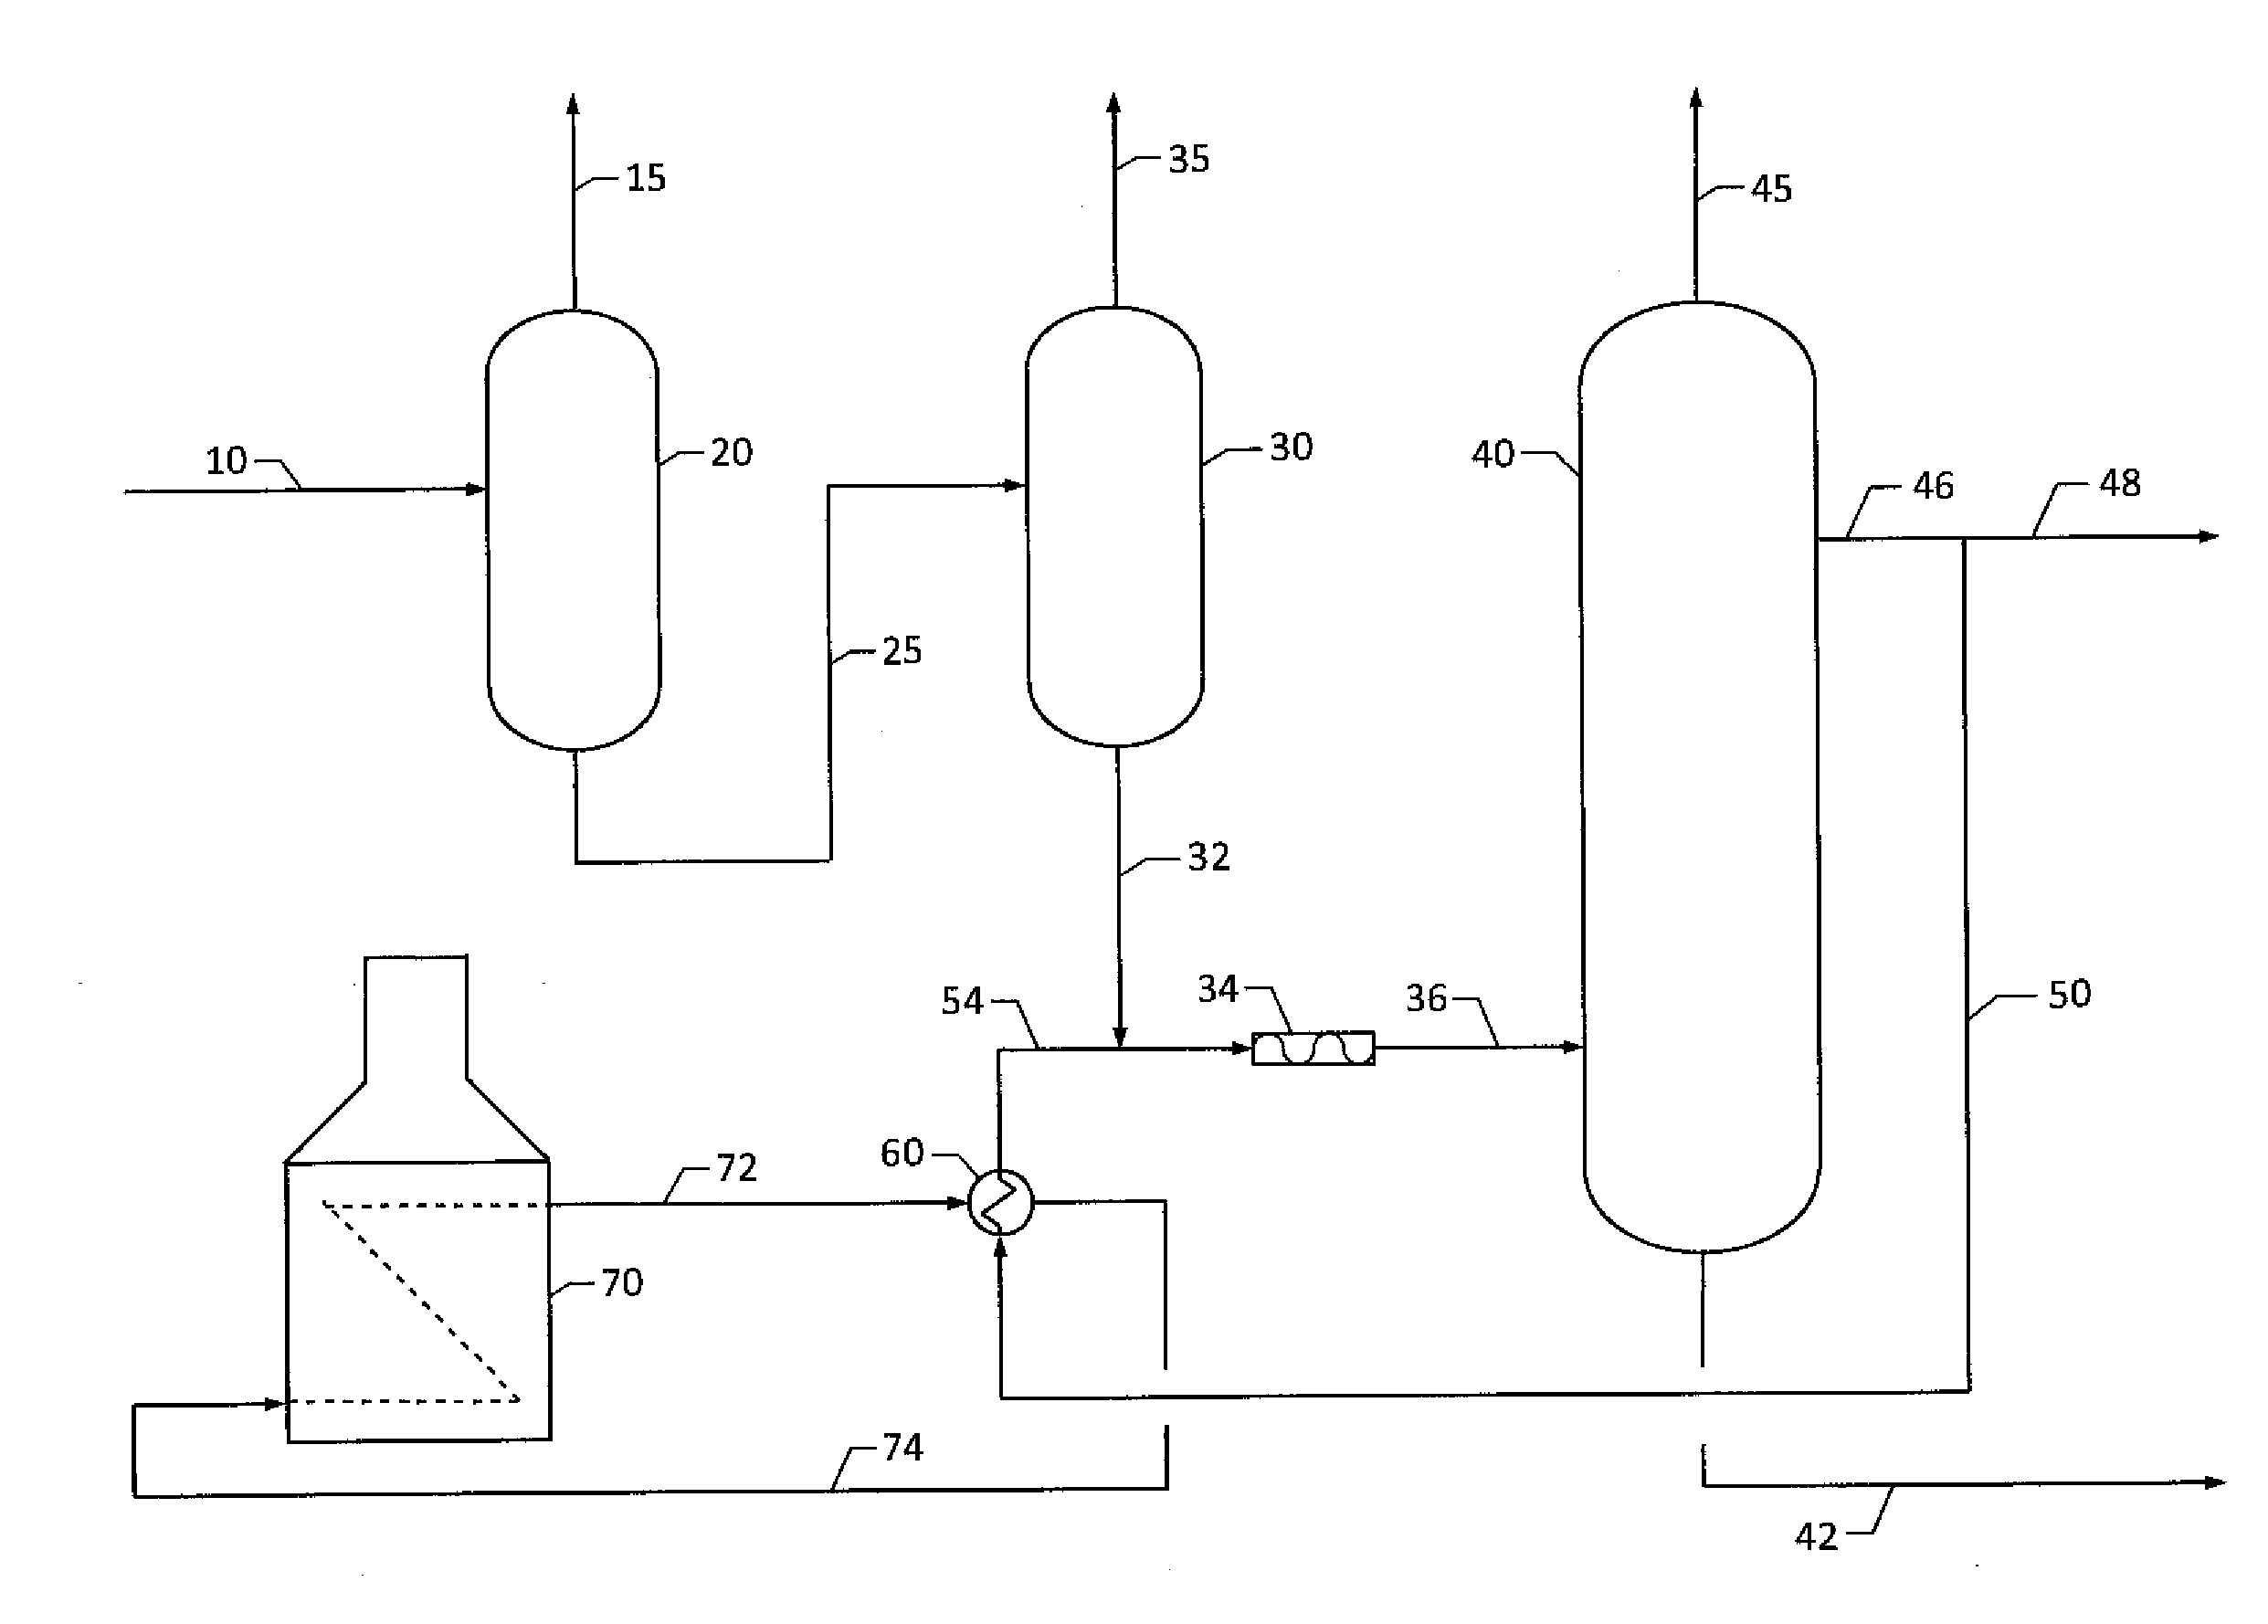 Distillation of used motor oil with distillate vapors